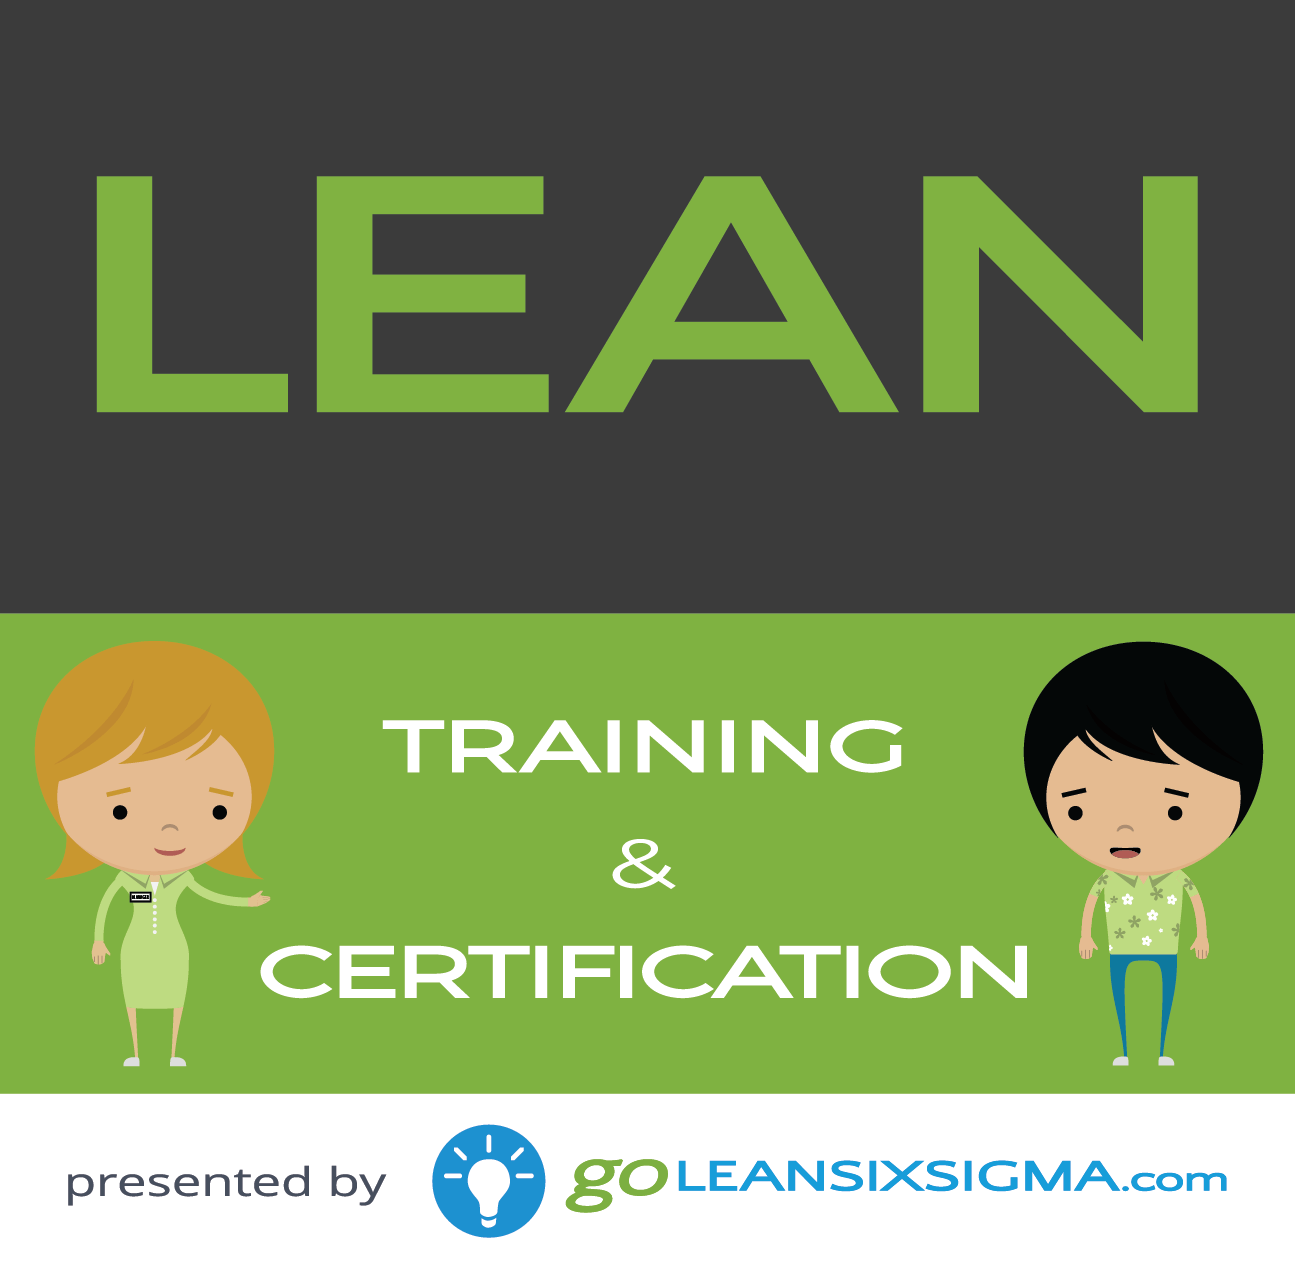 Lean Training & Certification